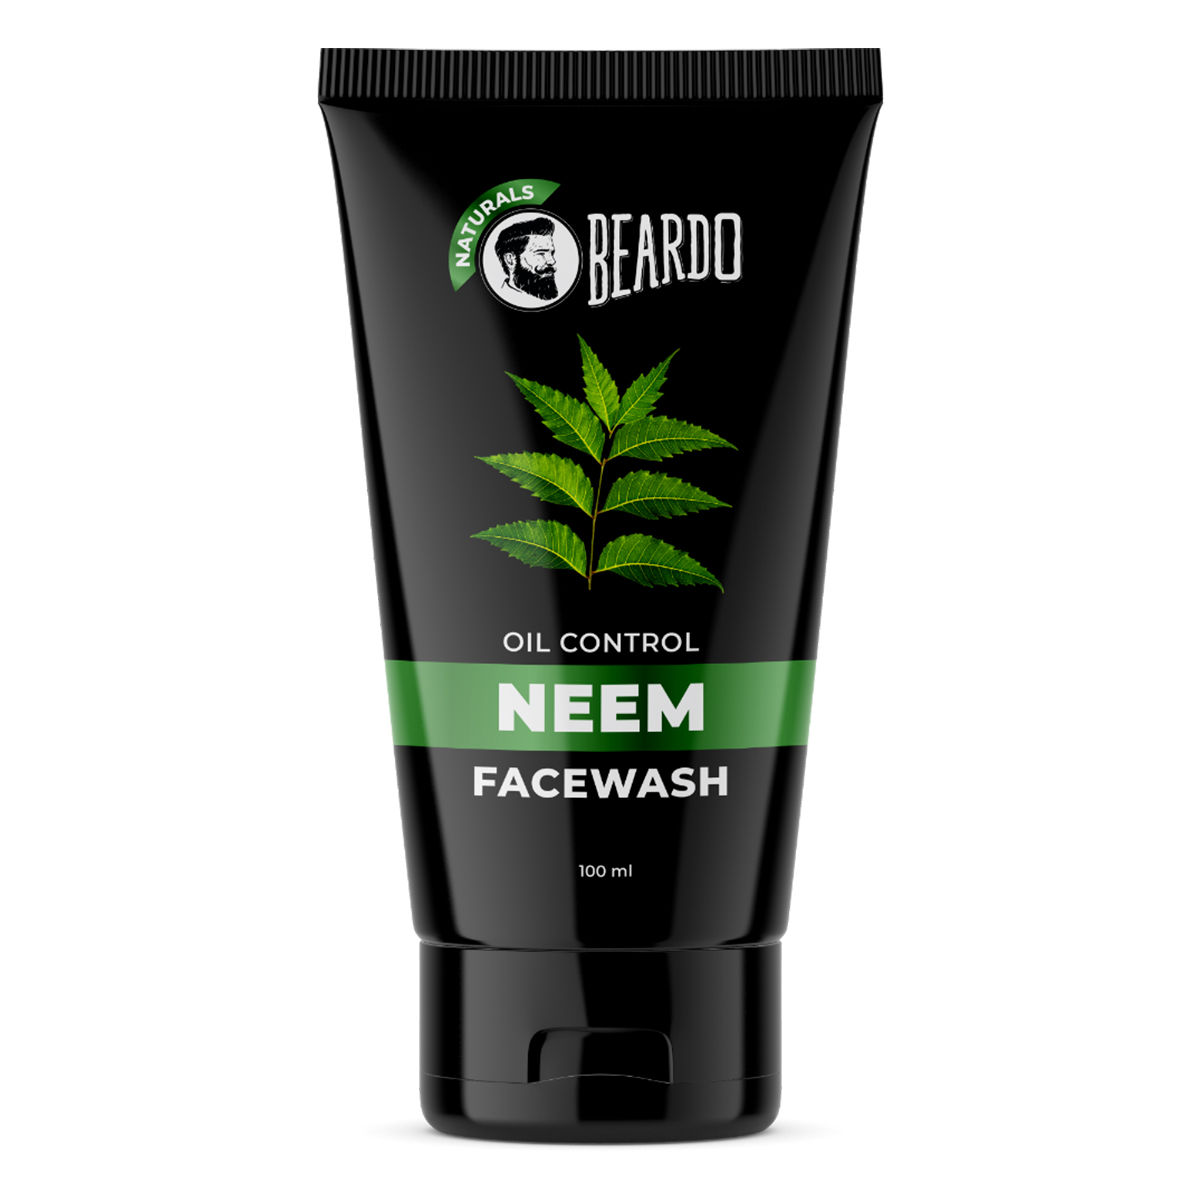 Buy Beardo Neem Facewash for Oil Control, 100 ml Online